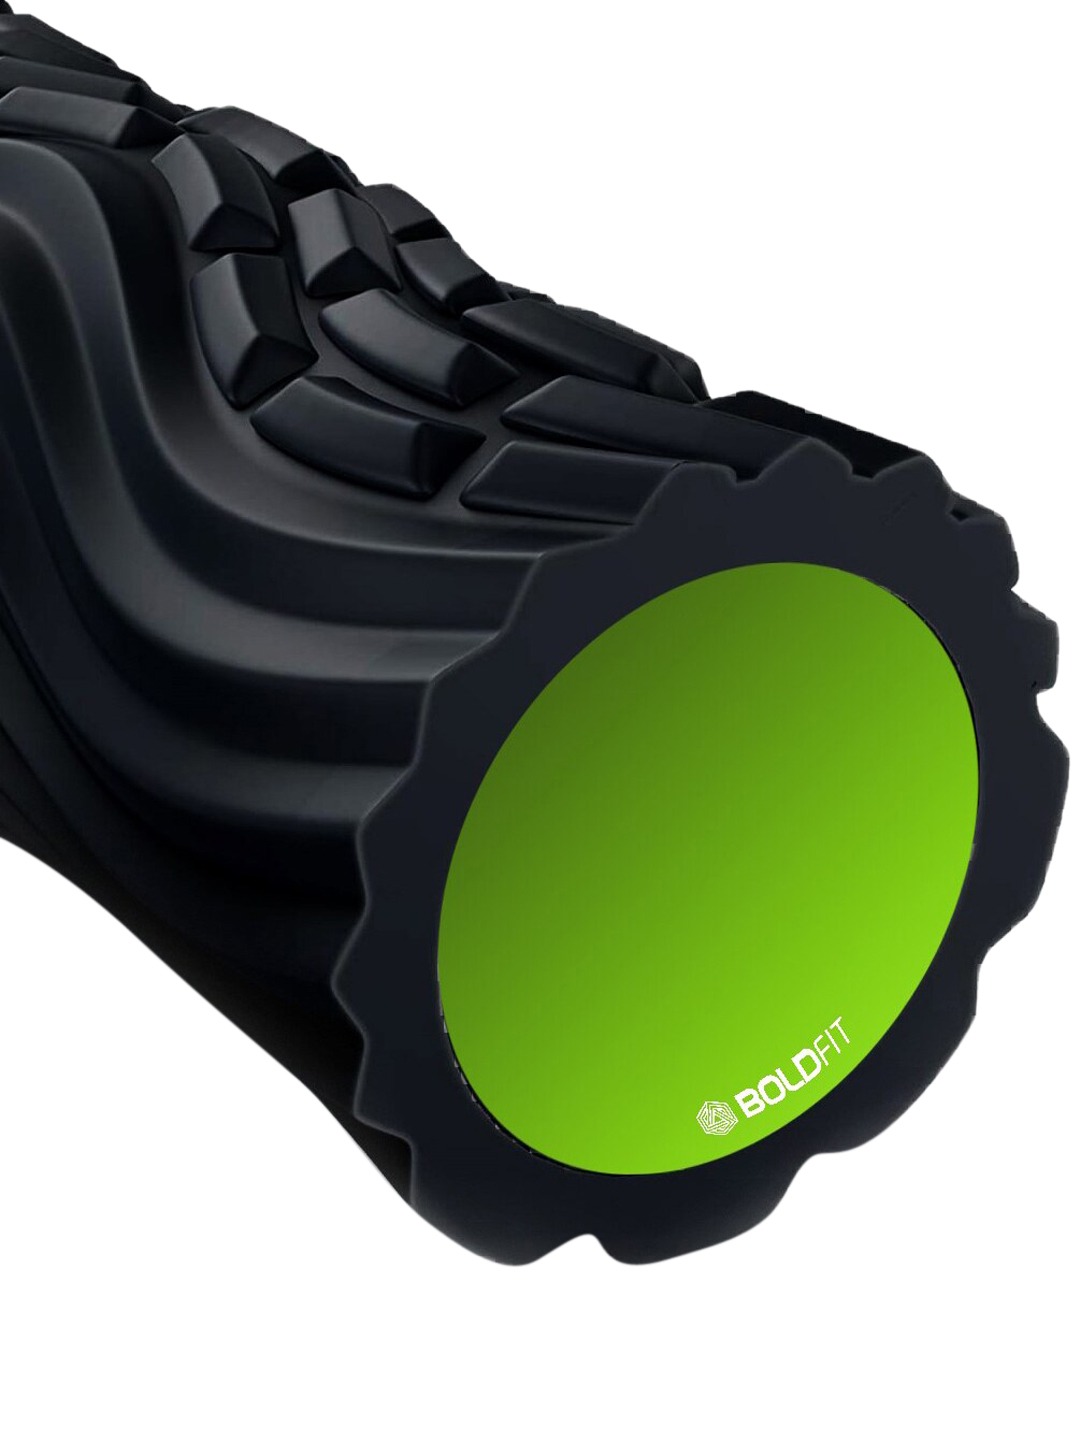 Accessories Sports Accessories | BOLDFIT  Black & Green  Foam Roller For Deep Tissue Massage - AT06684